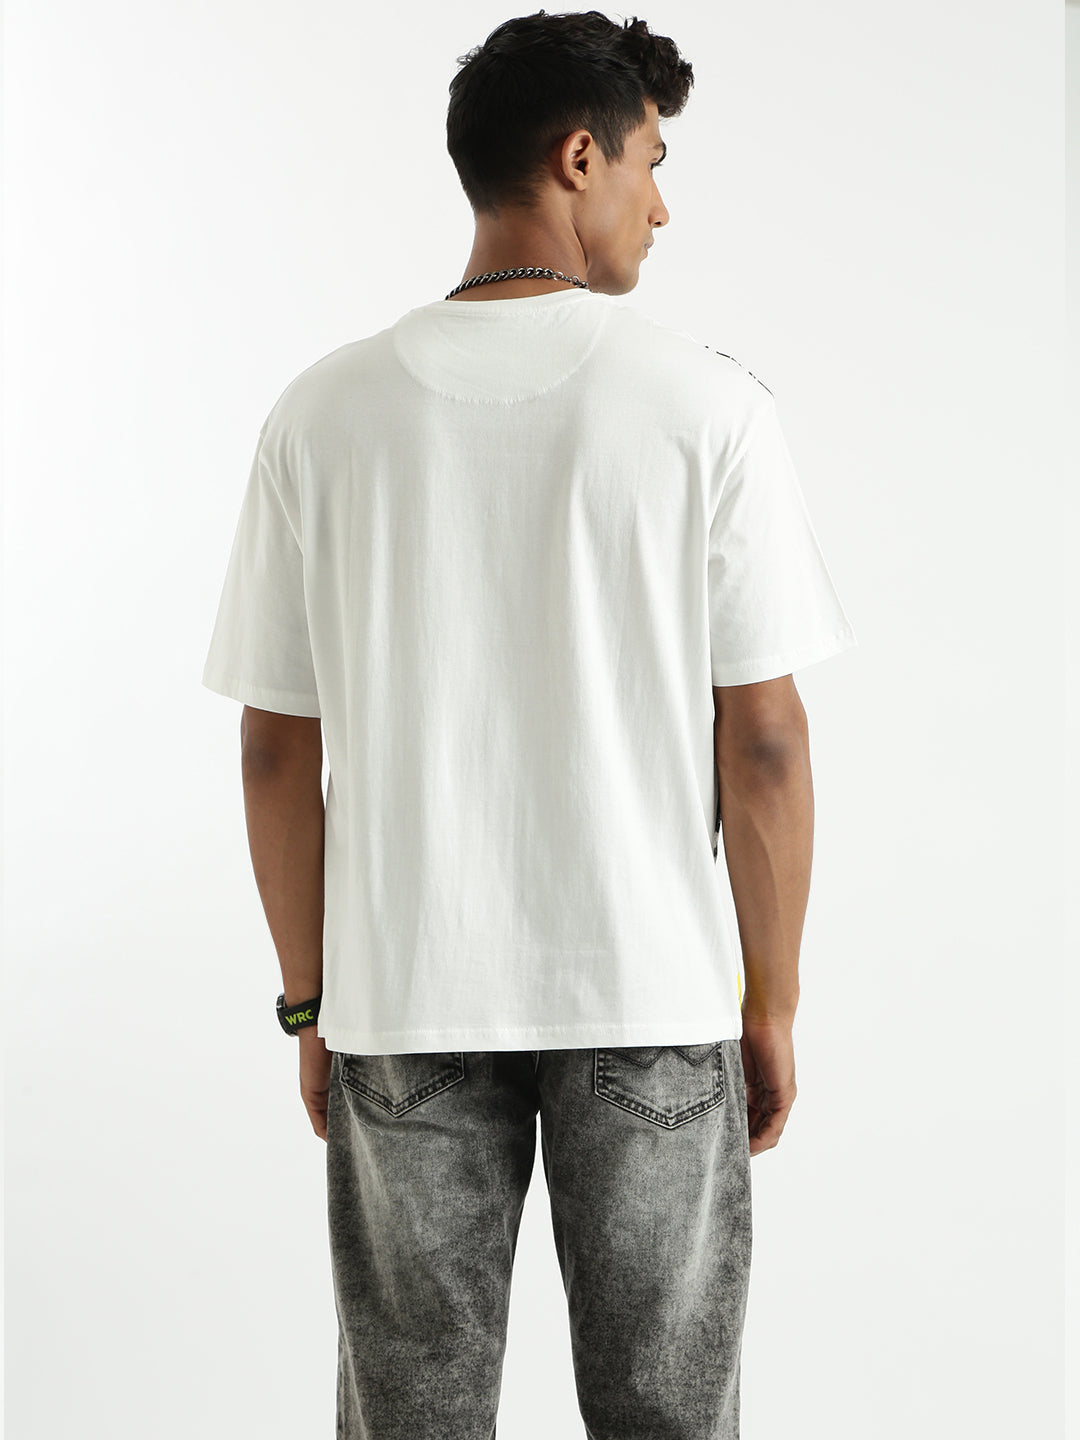 Spoyl White T-Shirt